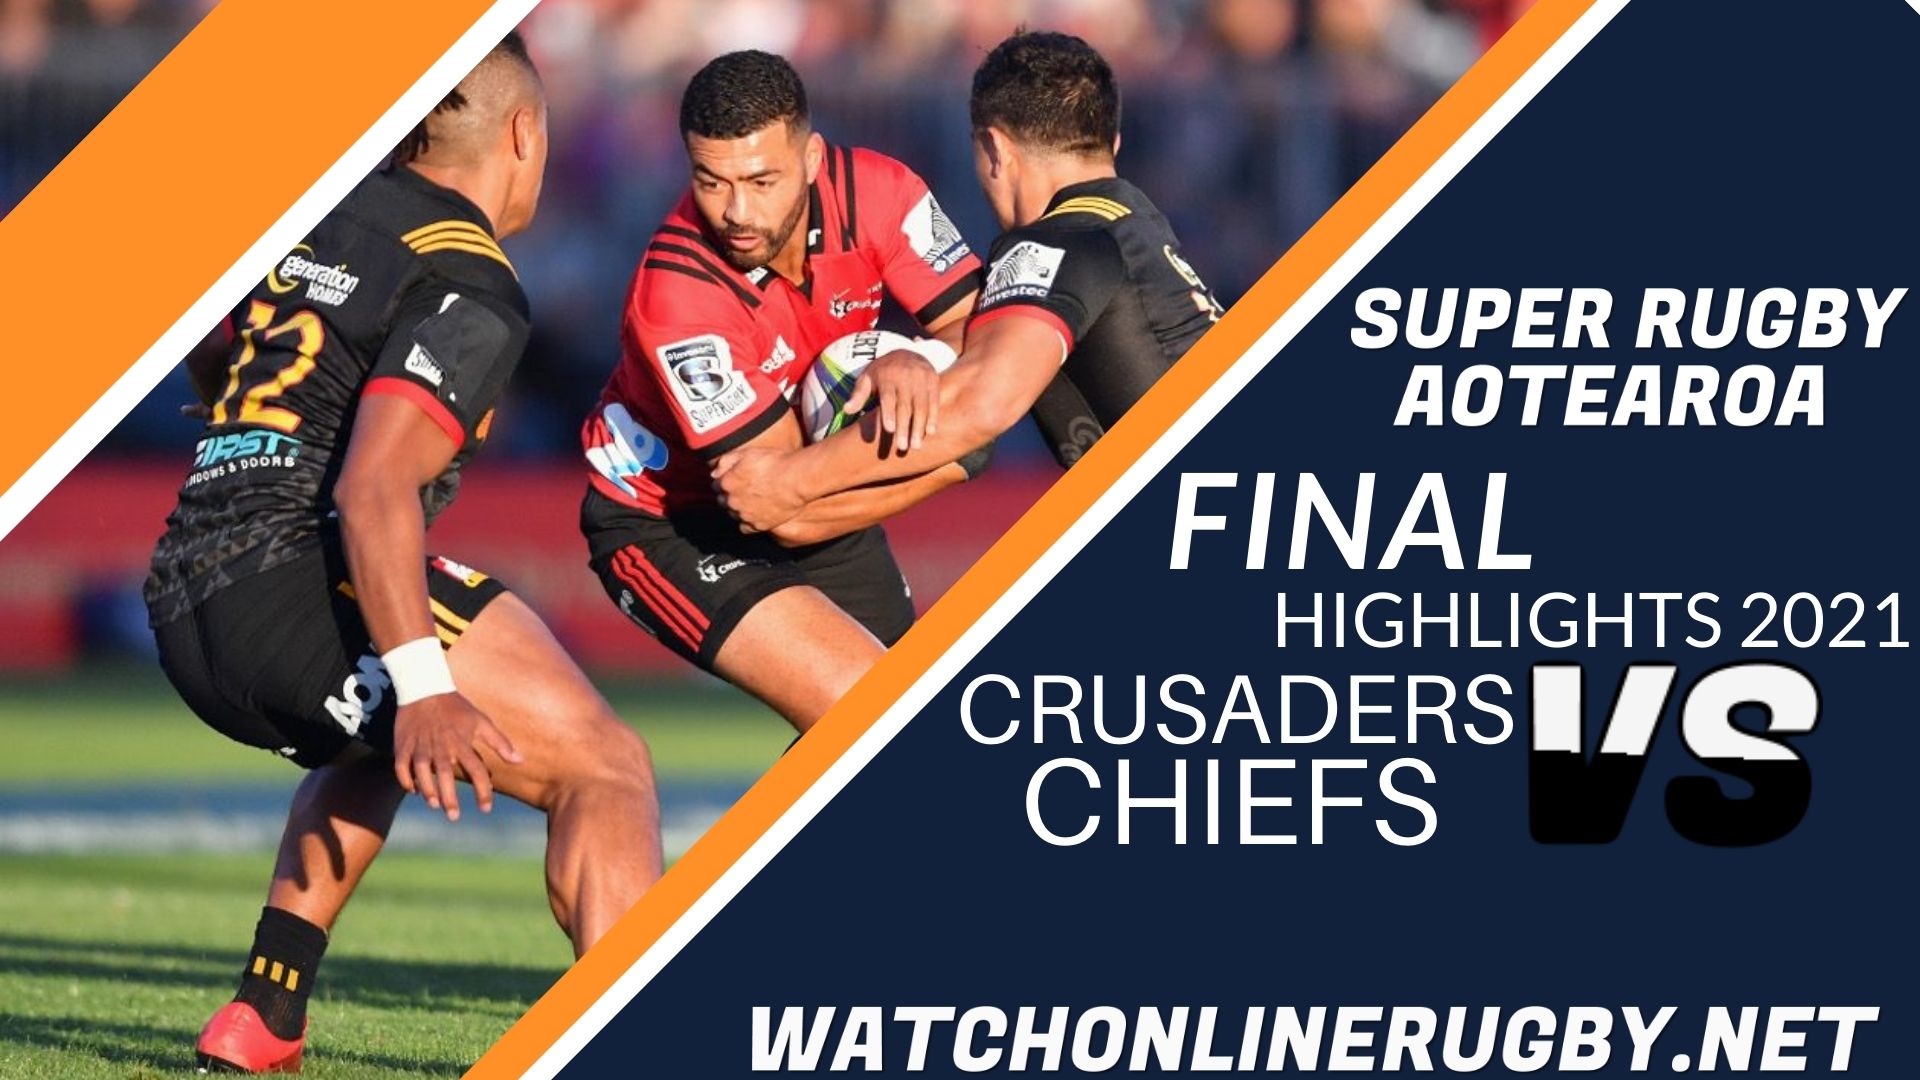 Crusaders Vs Chiefs Super Rugby Aotearoa 2021 Final